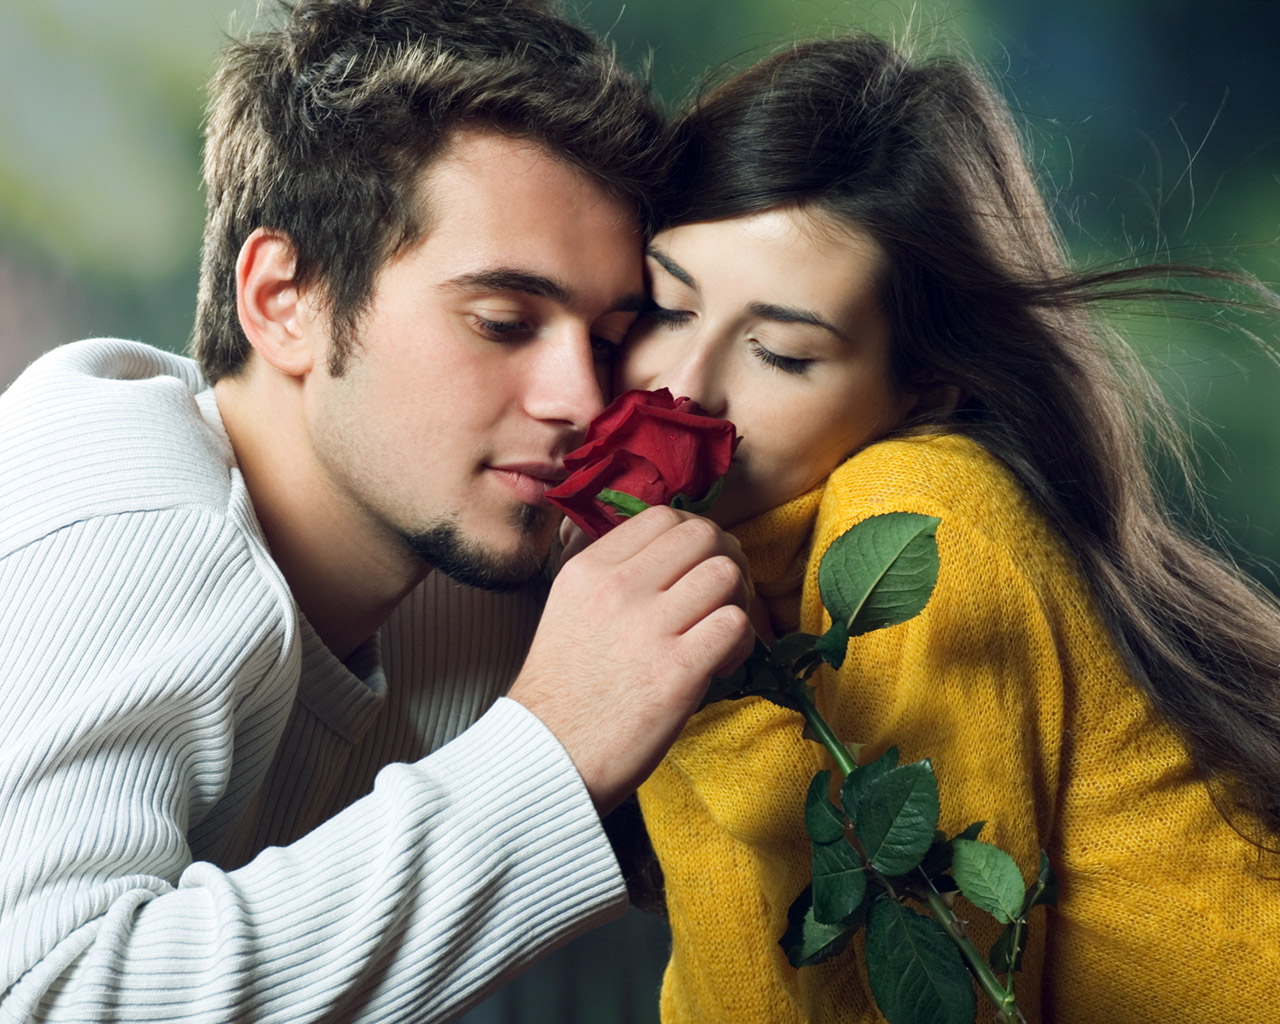 https://blogger.googleusercontent.com/img/b/R29vZ2xl/AVvXsEhivUXMY7nfh4IlyC-1lvlG0Z464Dsx0JxNuI6xvqybhufIJllct8jgDQzYZhfg0Ep51V8GTXMDTKylcYKRcKuuwA7ZYFt92i9SU1XwWsufXk5yECCQmg7PnI5wN0r8n4DbjPKP426NtJNy/s1600/Saint_Valentines_Day_A_romantic_couple_013598_.jpg